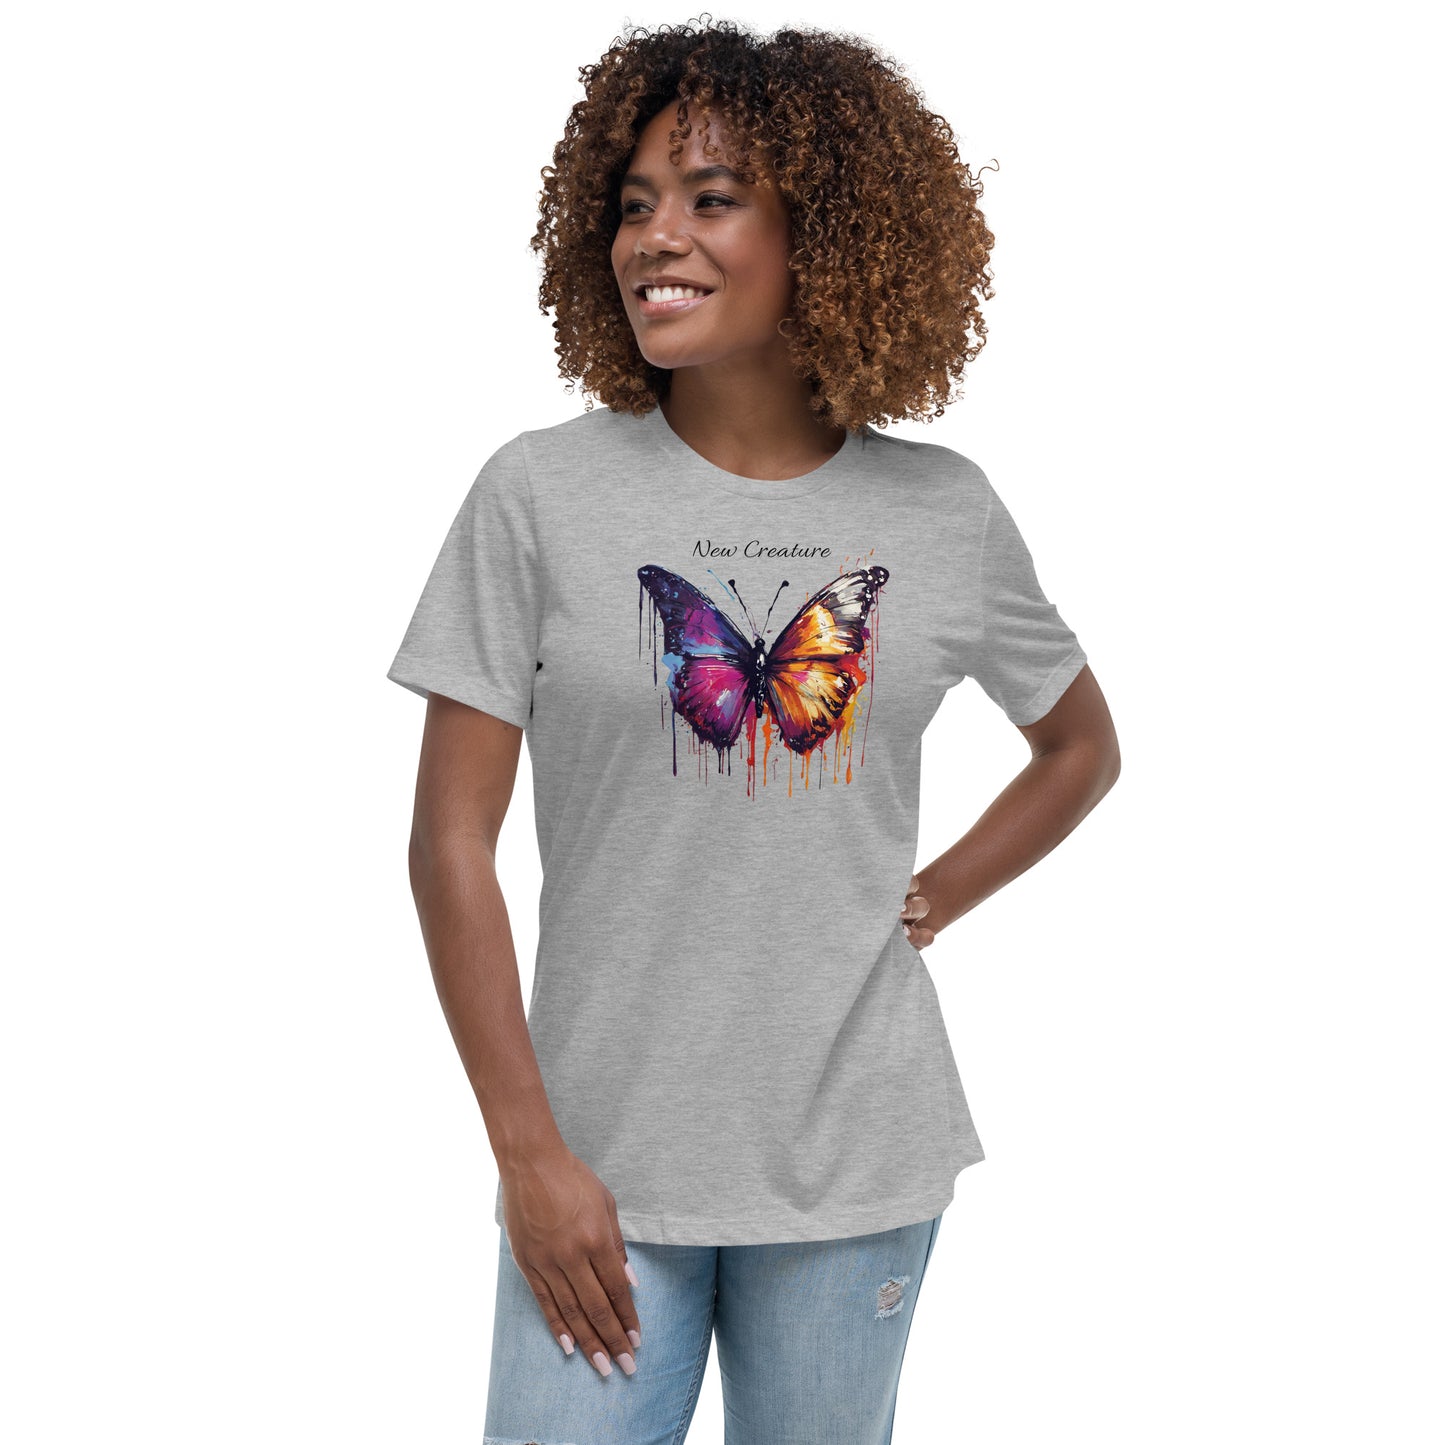 New Creature Christian Women's Beautiful Graphic T-Shirt